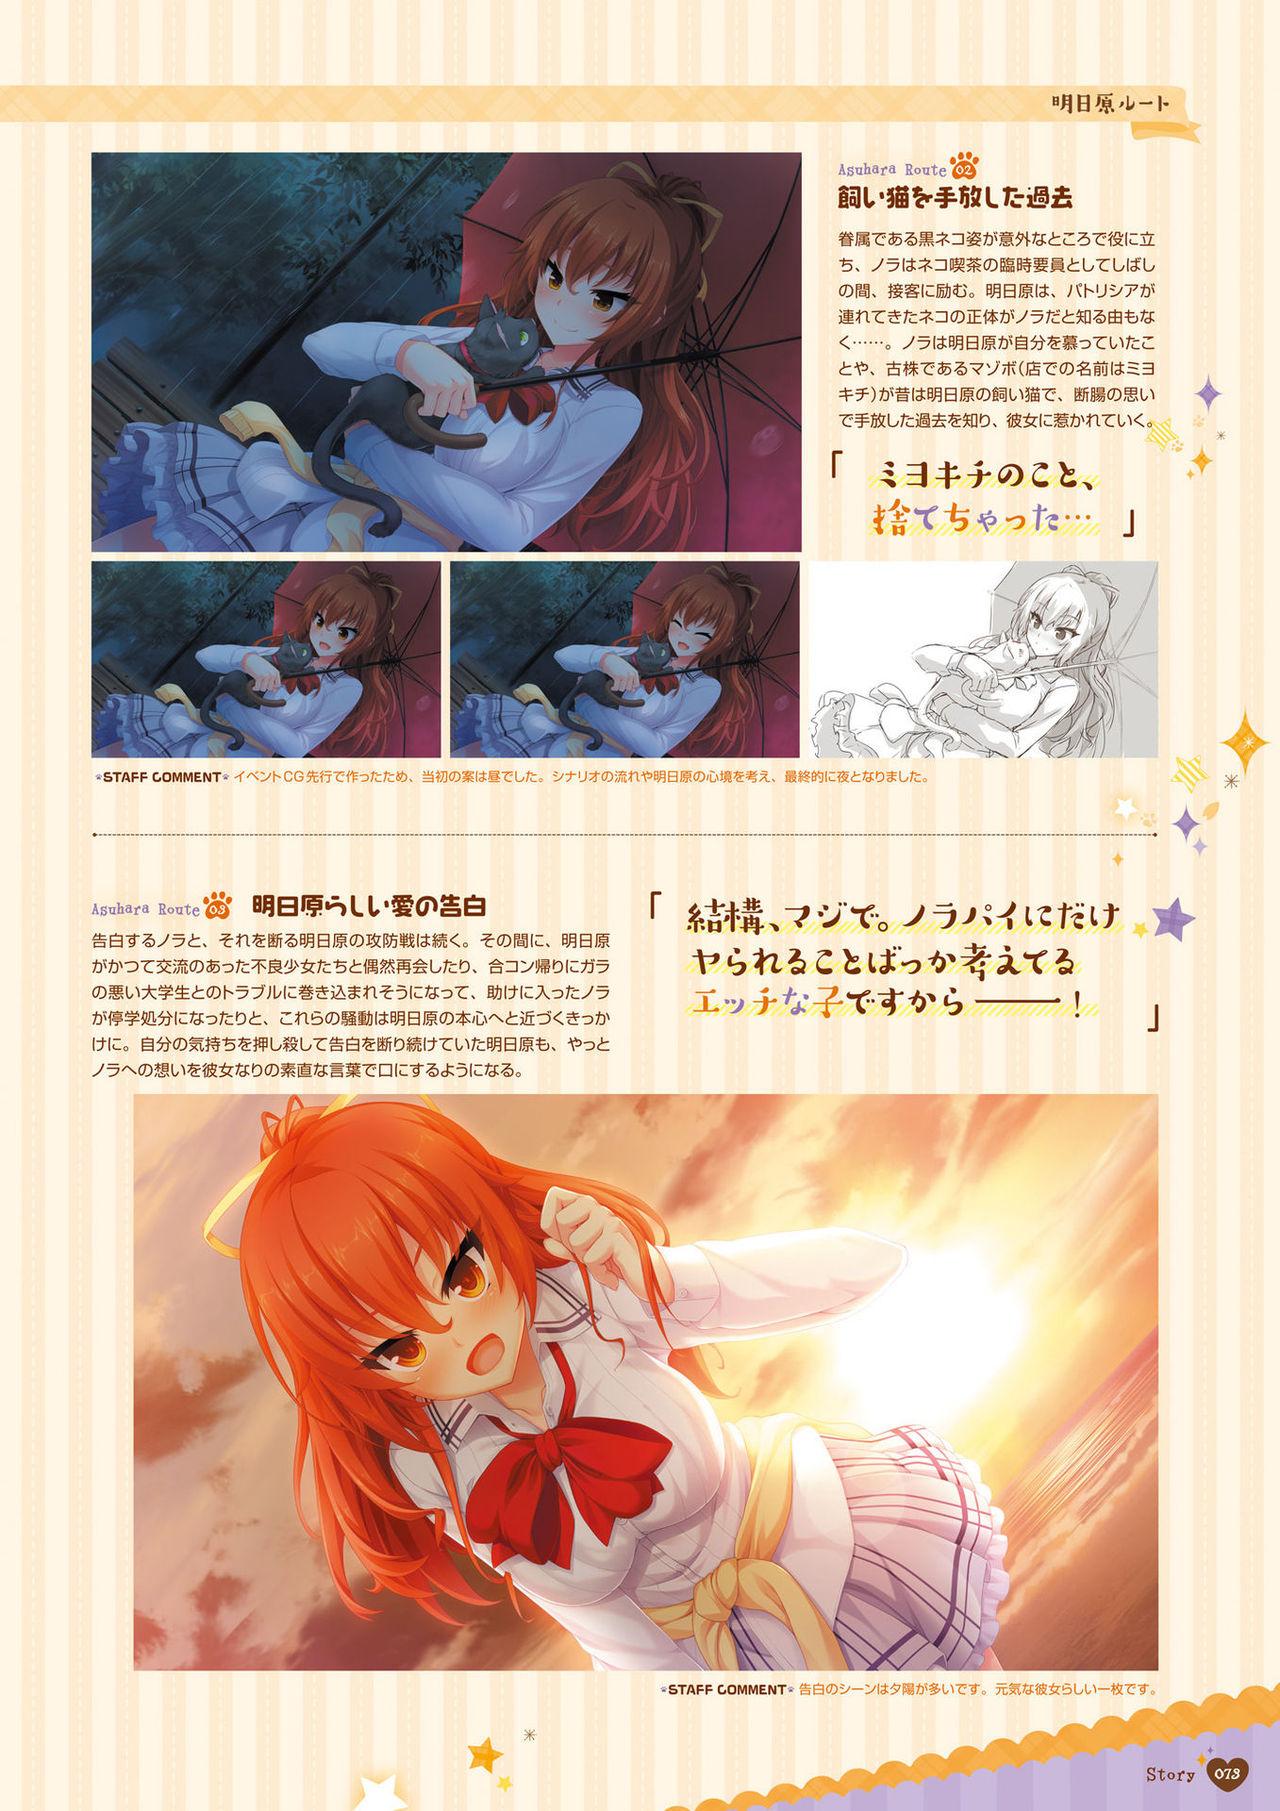 [HARUKAZE] Nora to Oujo to Noraneko Heart -Nora, Princess, and Stray Cat.- Visual Fan Book [Digital] 72